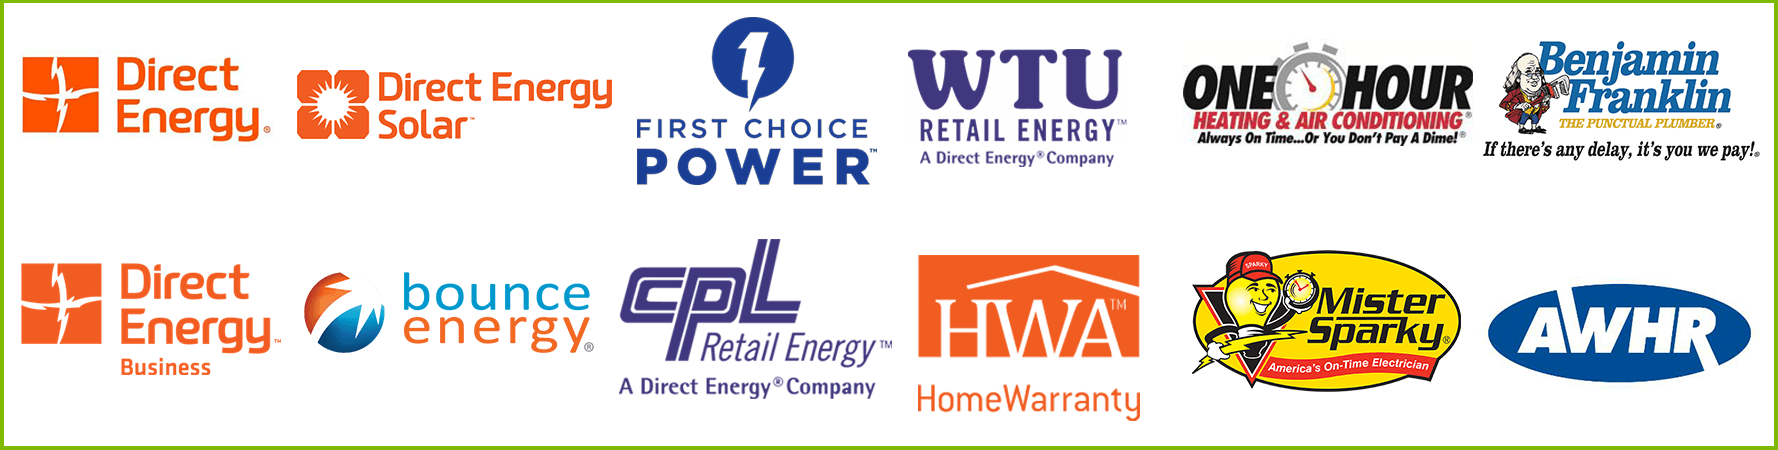 Direct Energy Logo - Direct Energy Talent Network